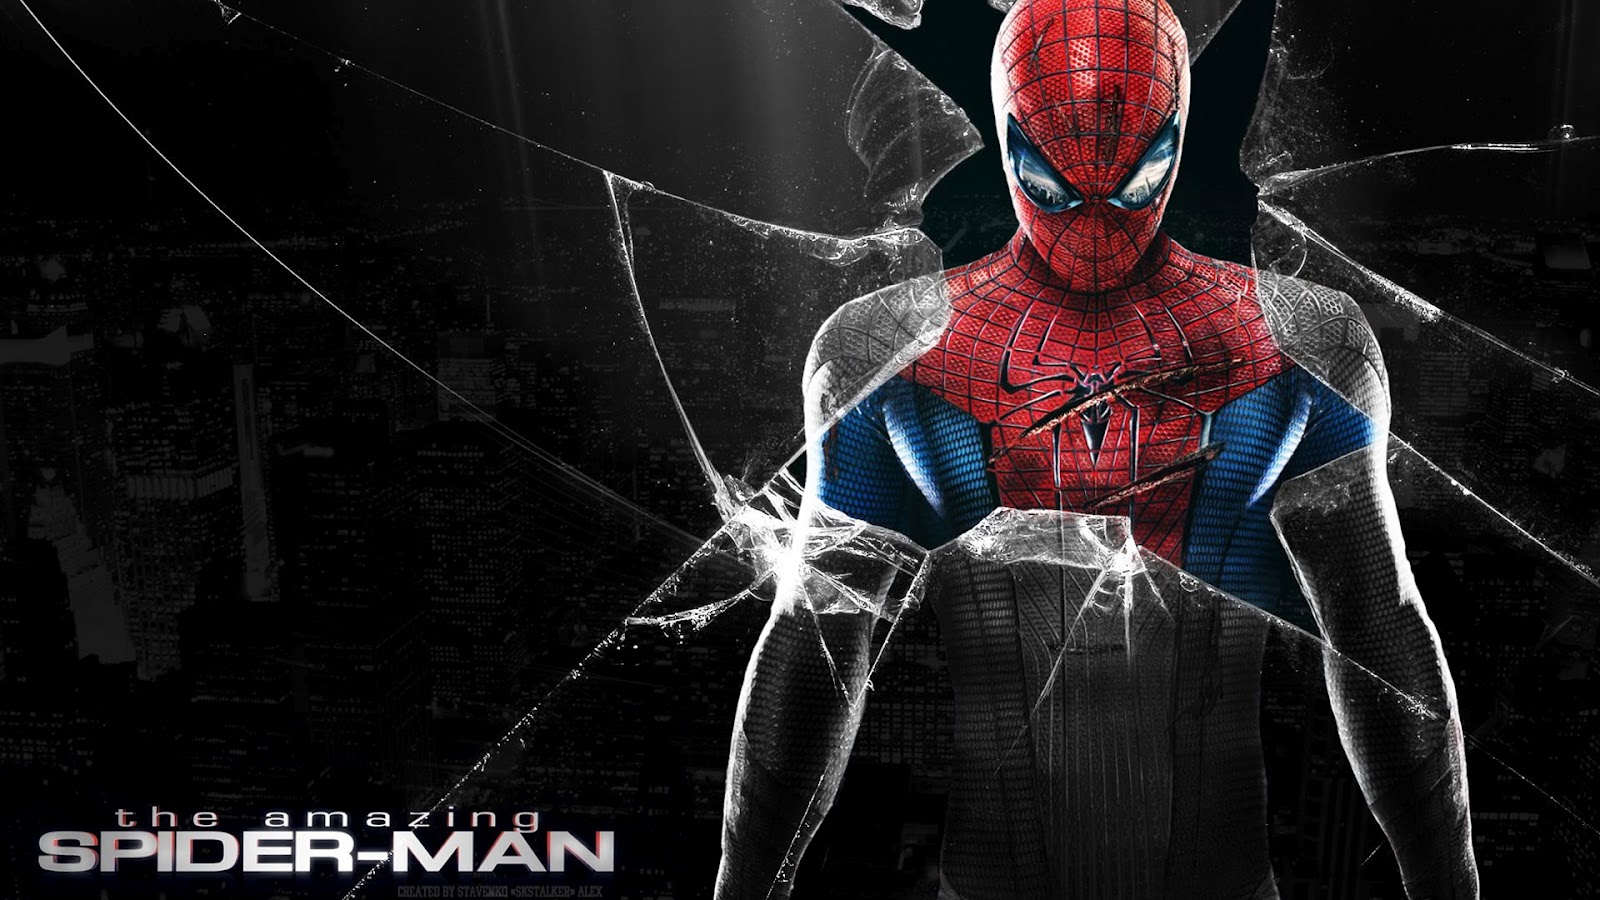 http://4.bp.blogspot.com/-JNy0K4RpGWg/UGM56LJvMbI/AAAAAAAAArg/wGkpqqyLq9s/s1600/2012-The-Amazing-Spider-Man_1920x10805.jpg